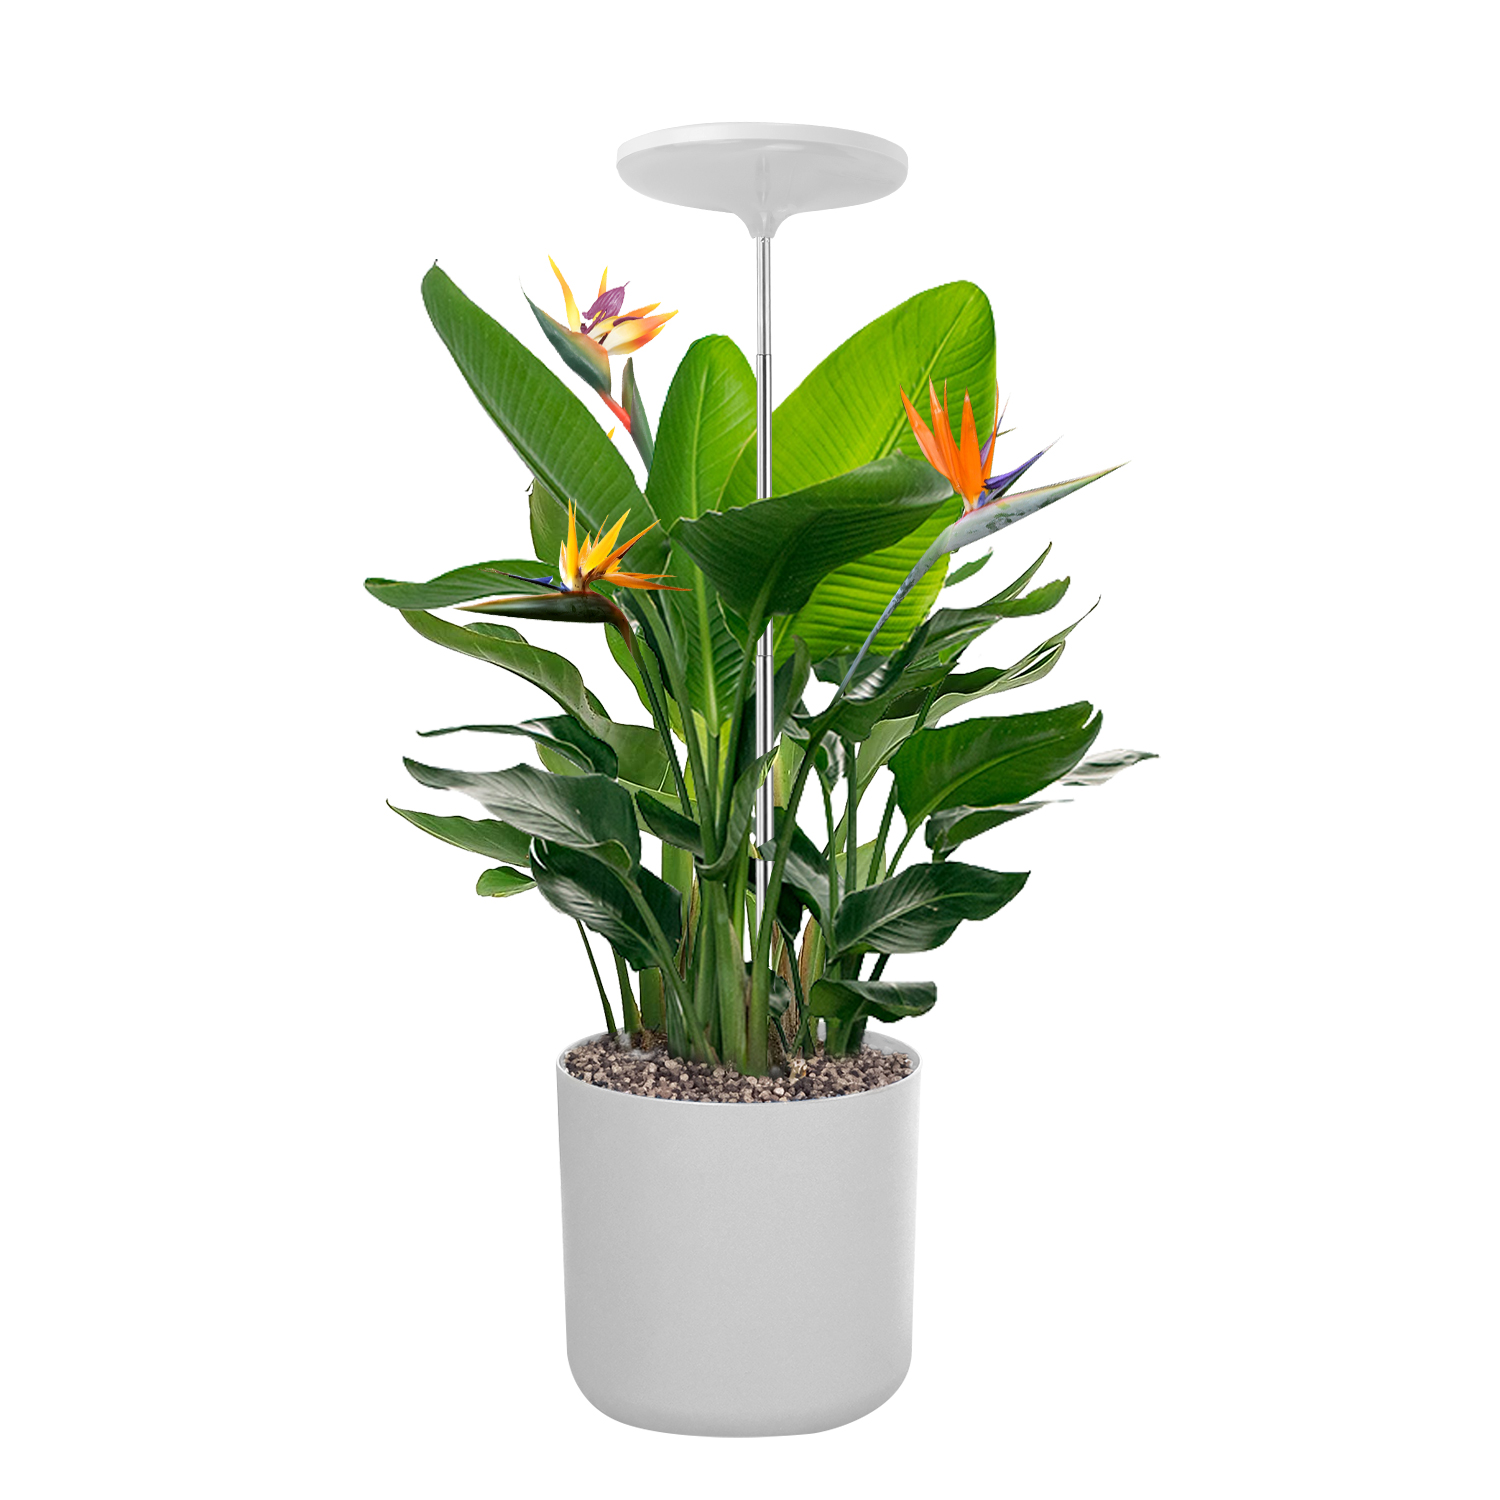 TG004 Interior Smart Plant Grow Light Lámpara Garden Grow Lights Luces decorativas para plantas